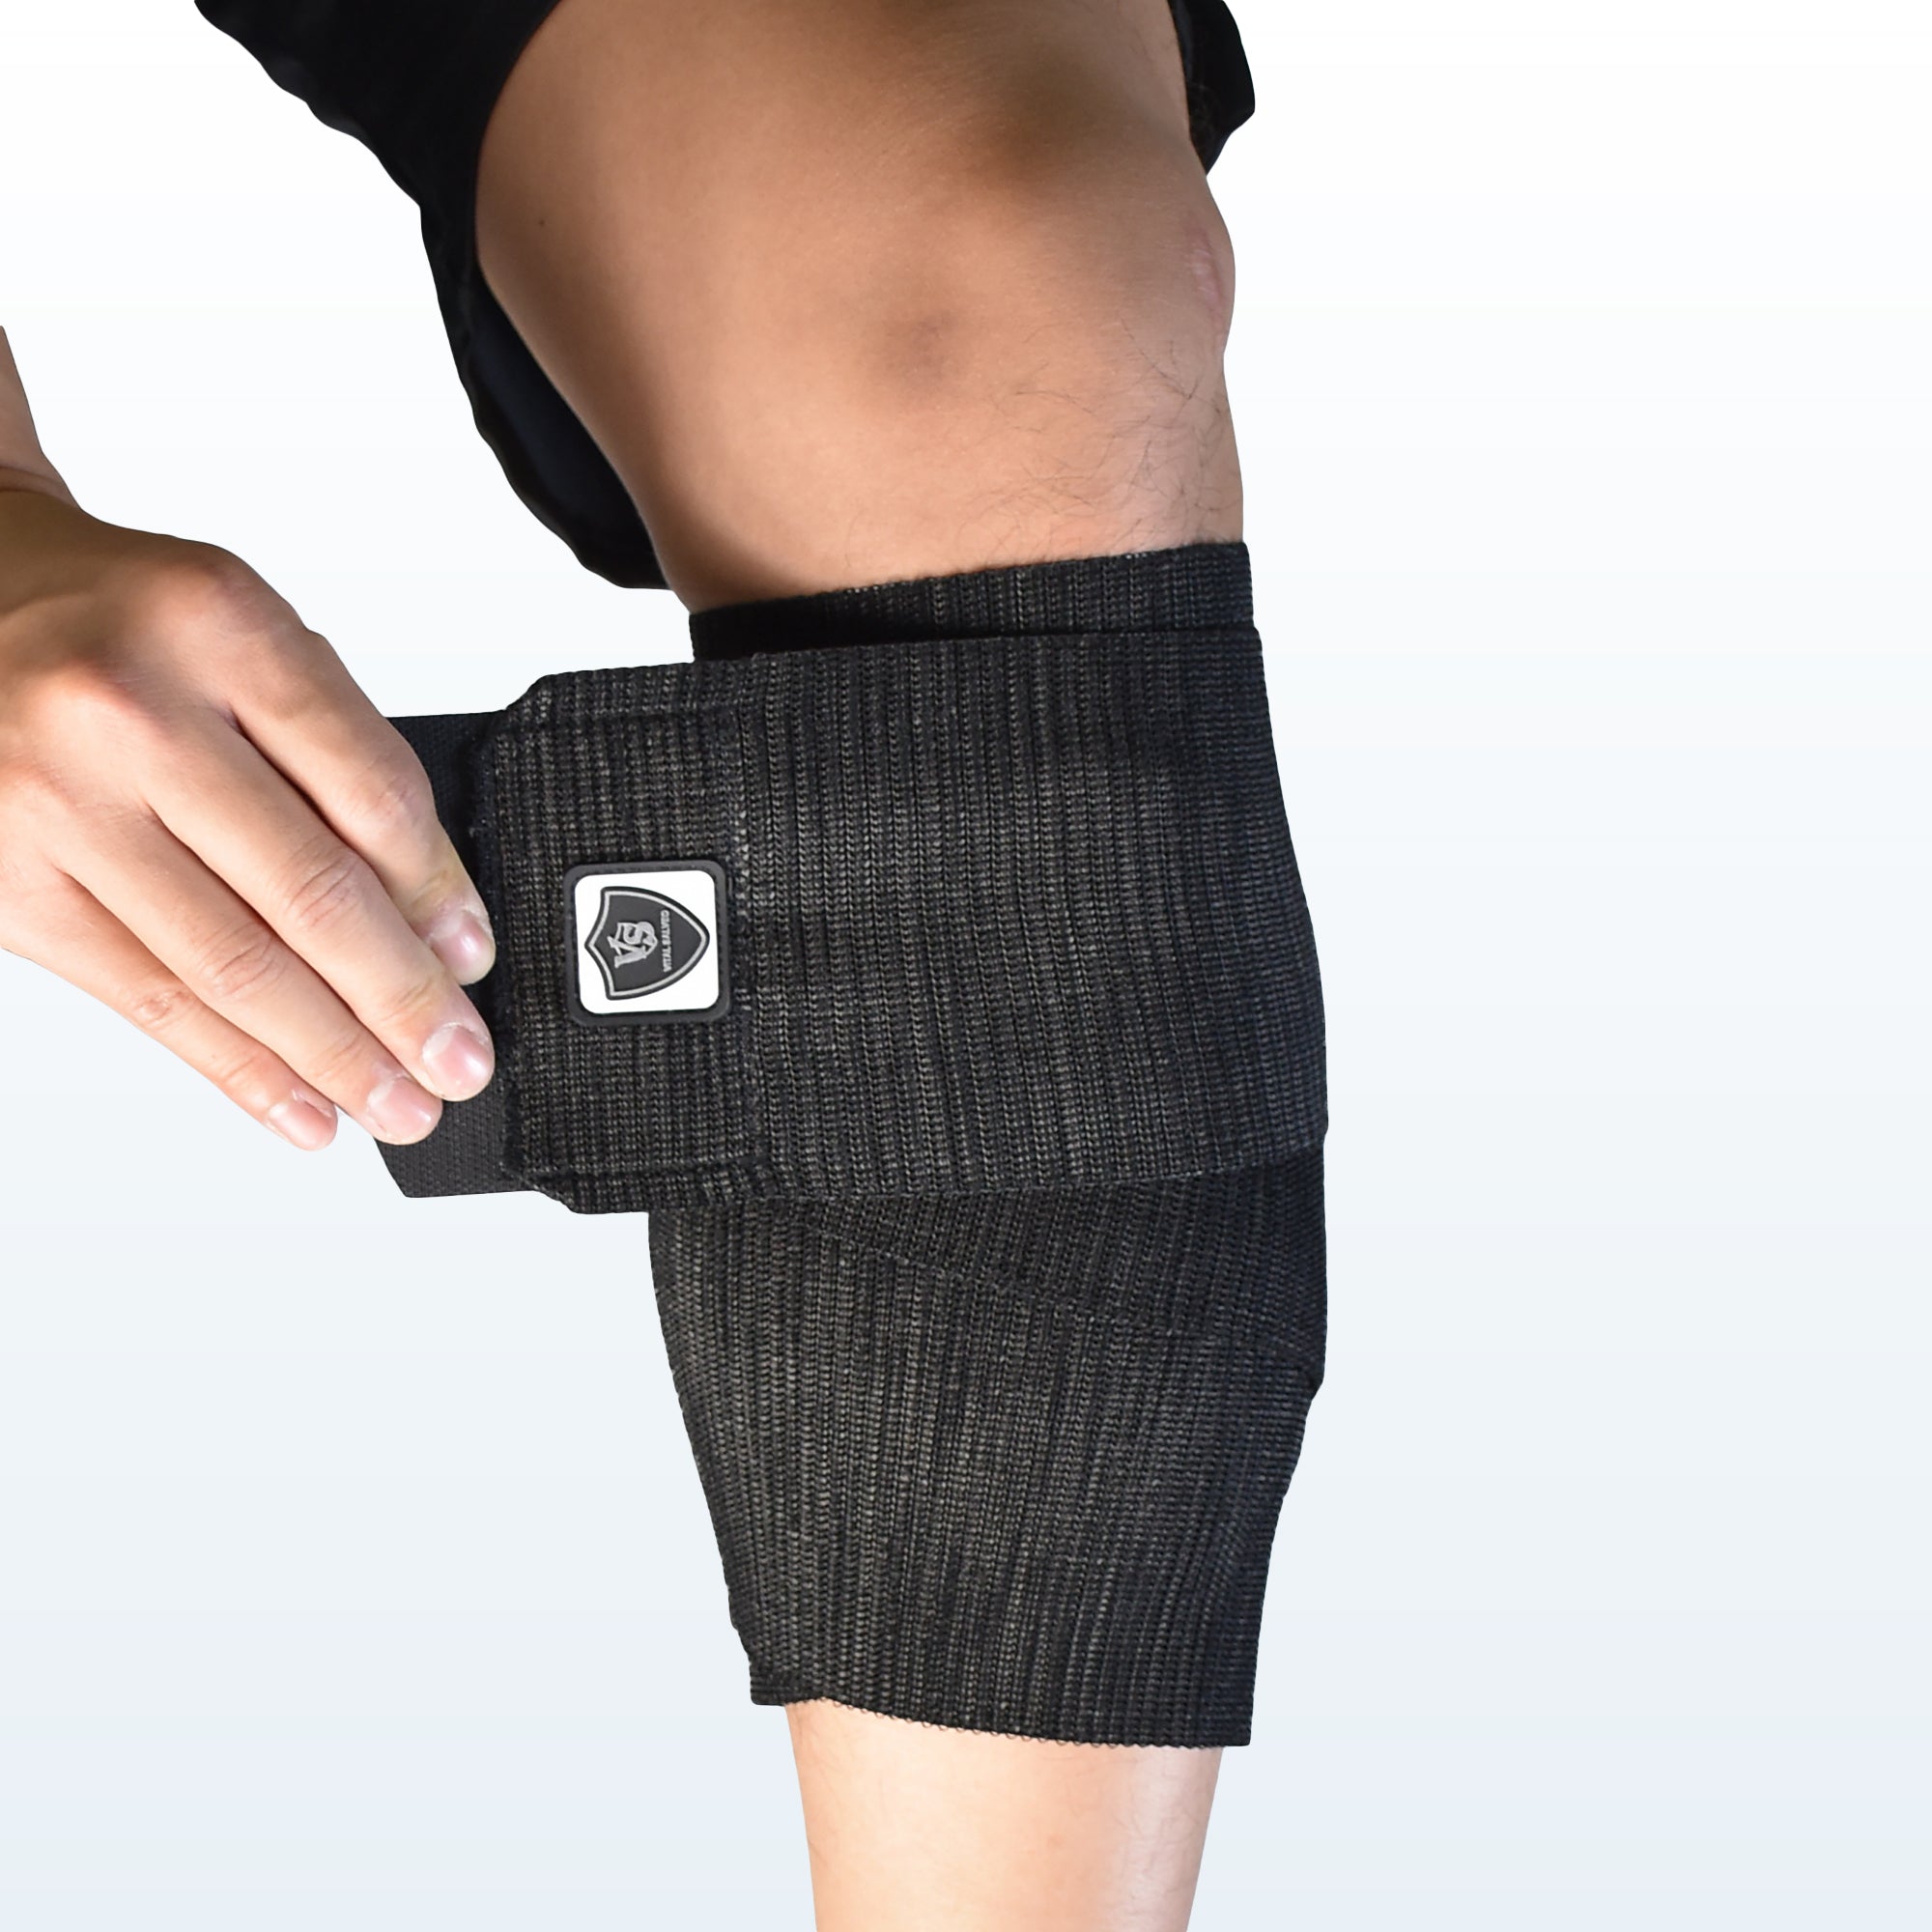 Adjustable Elastic Compression Calf Bandage Wrap (1PC)-4"* 61" - Vital Salveo